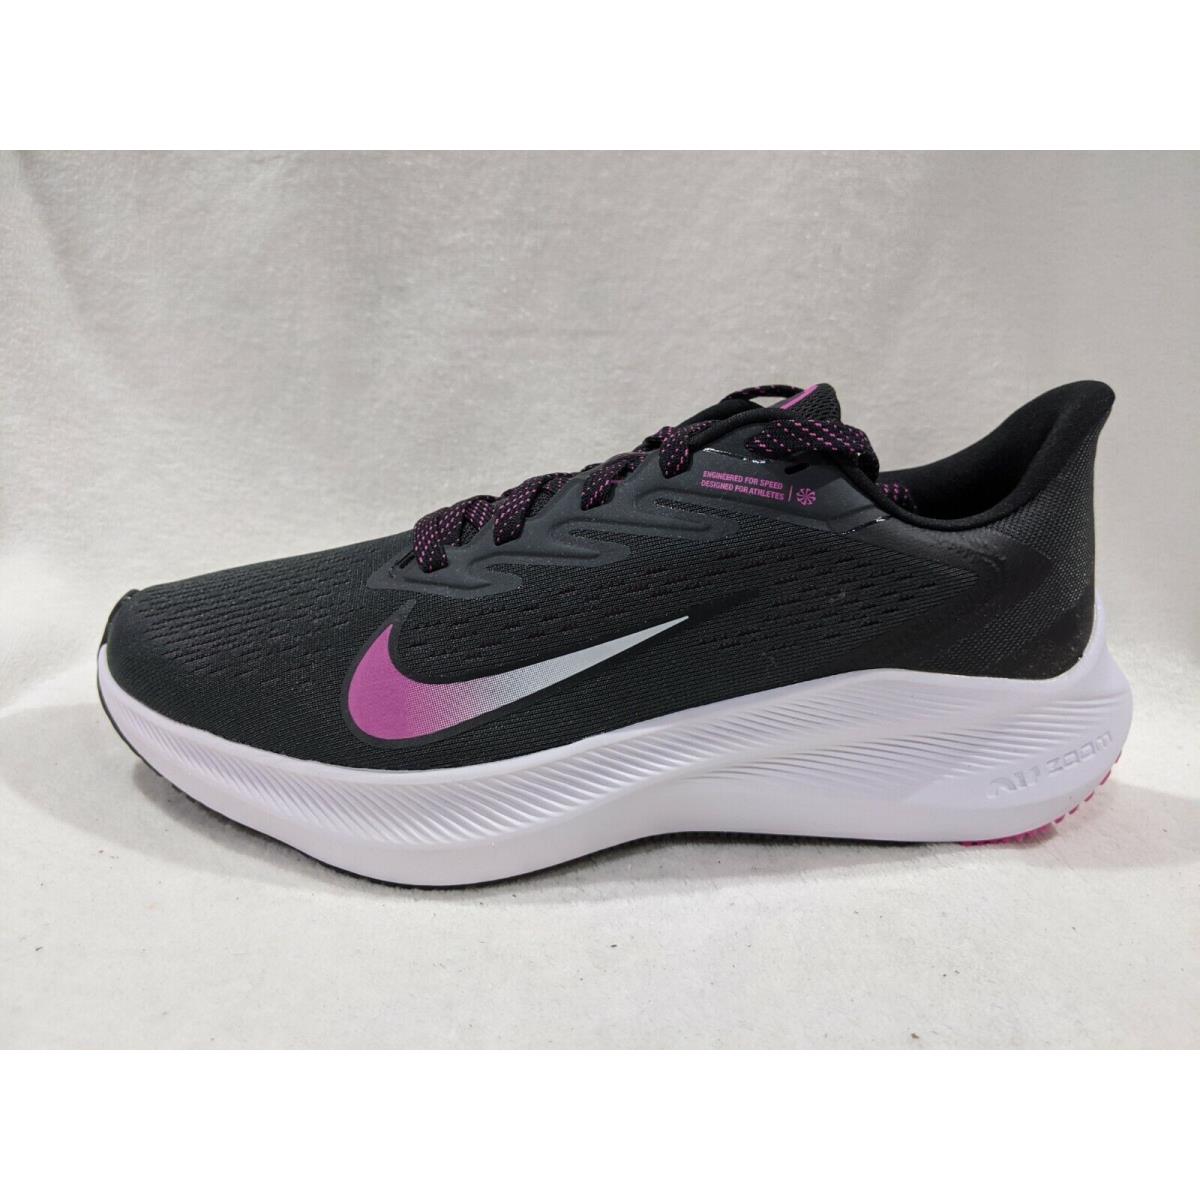 Nike shoes Zoom Winflo - Black , Grey , Pink 5